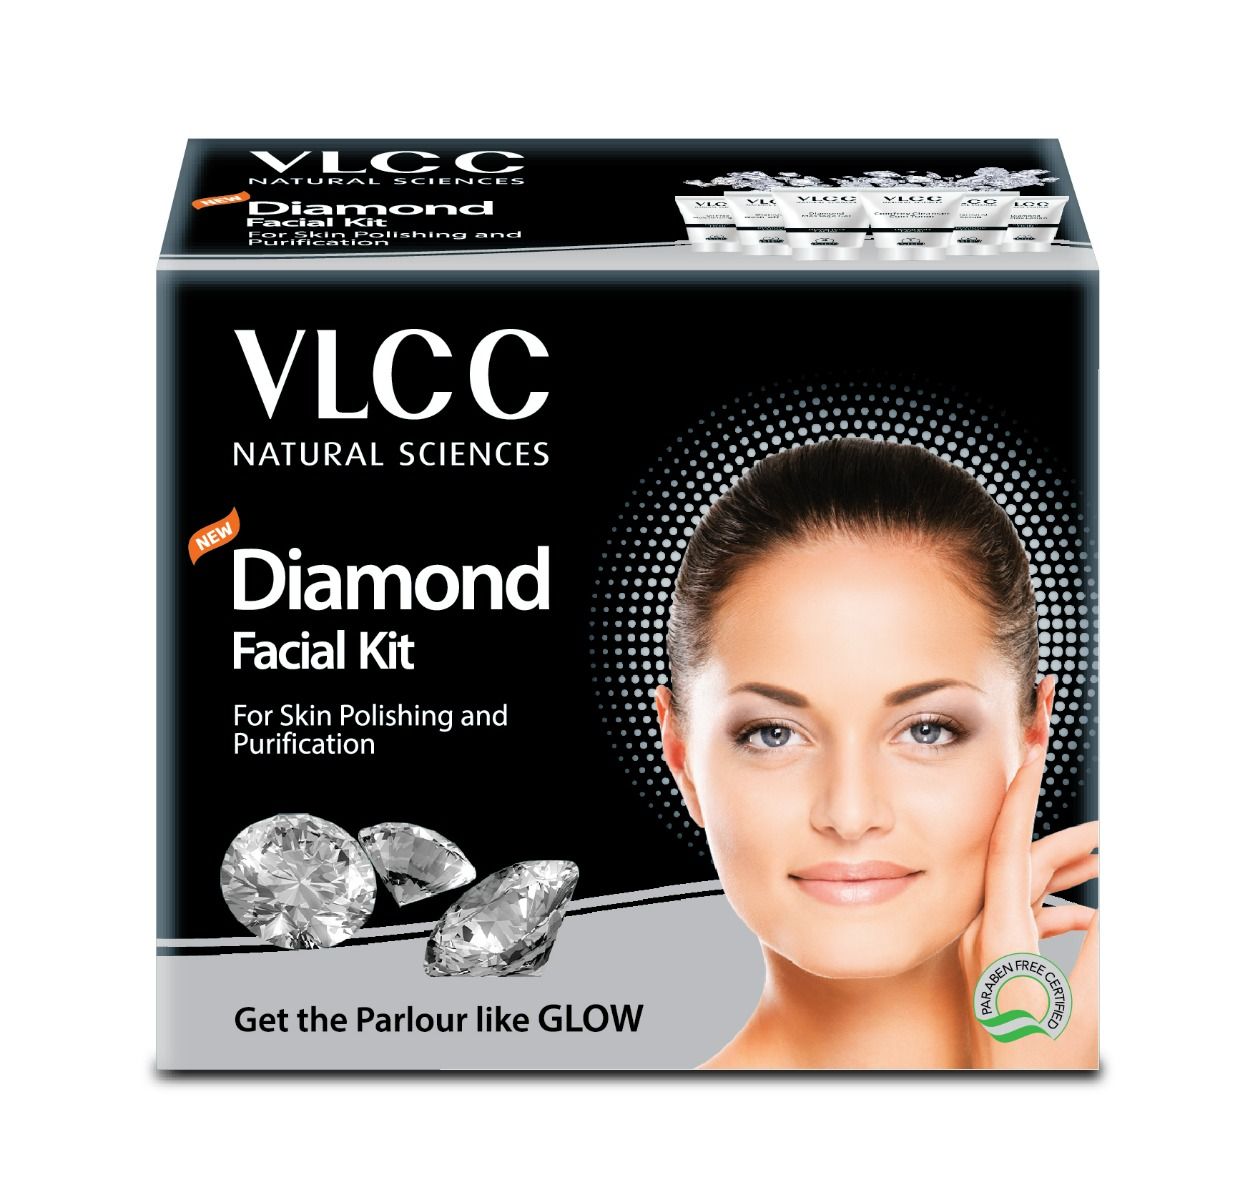 VLCC Diamond Facial Kit, 1 Count, Pack of 1 